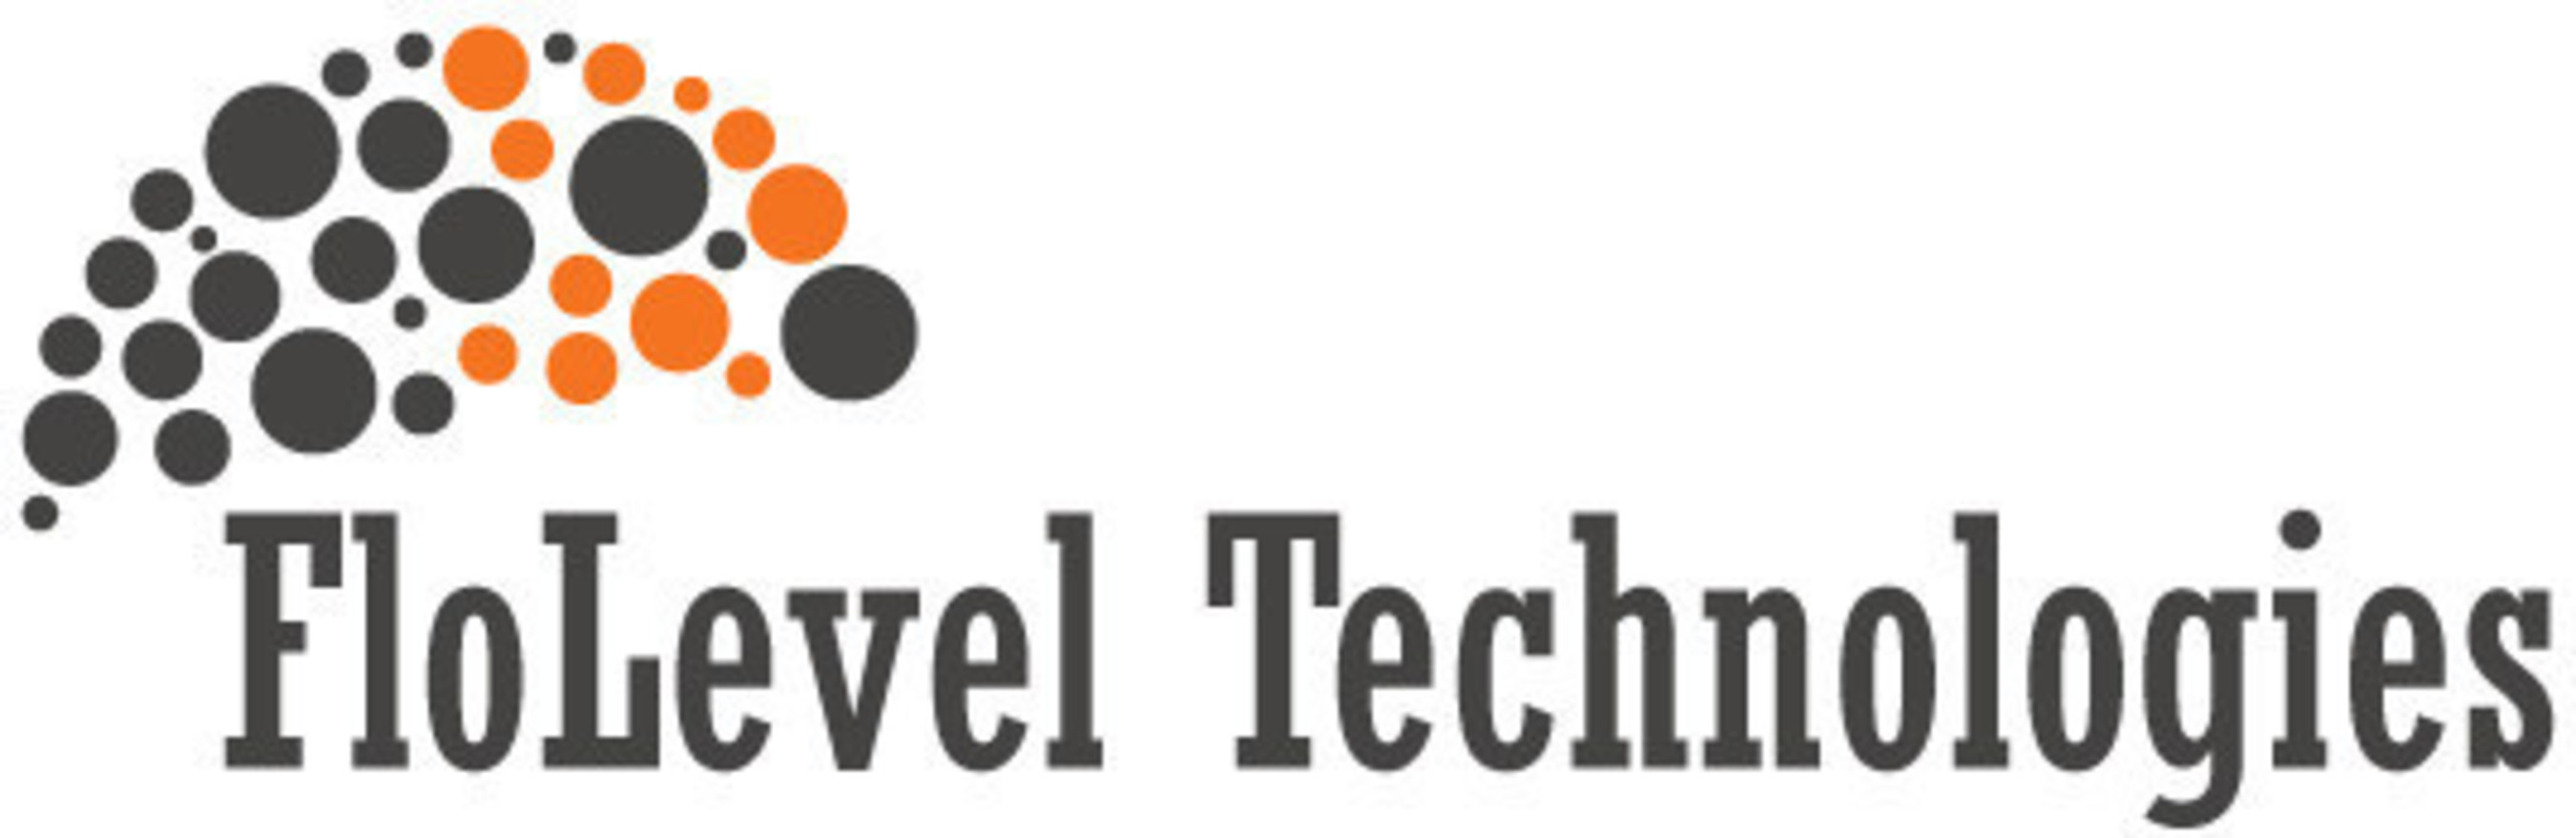 FloLevel Technologies logo (PRNewsFoto/FloLevel Technologies)